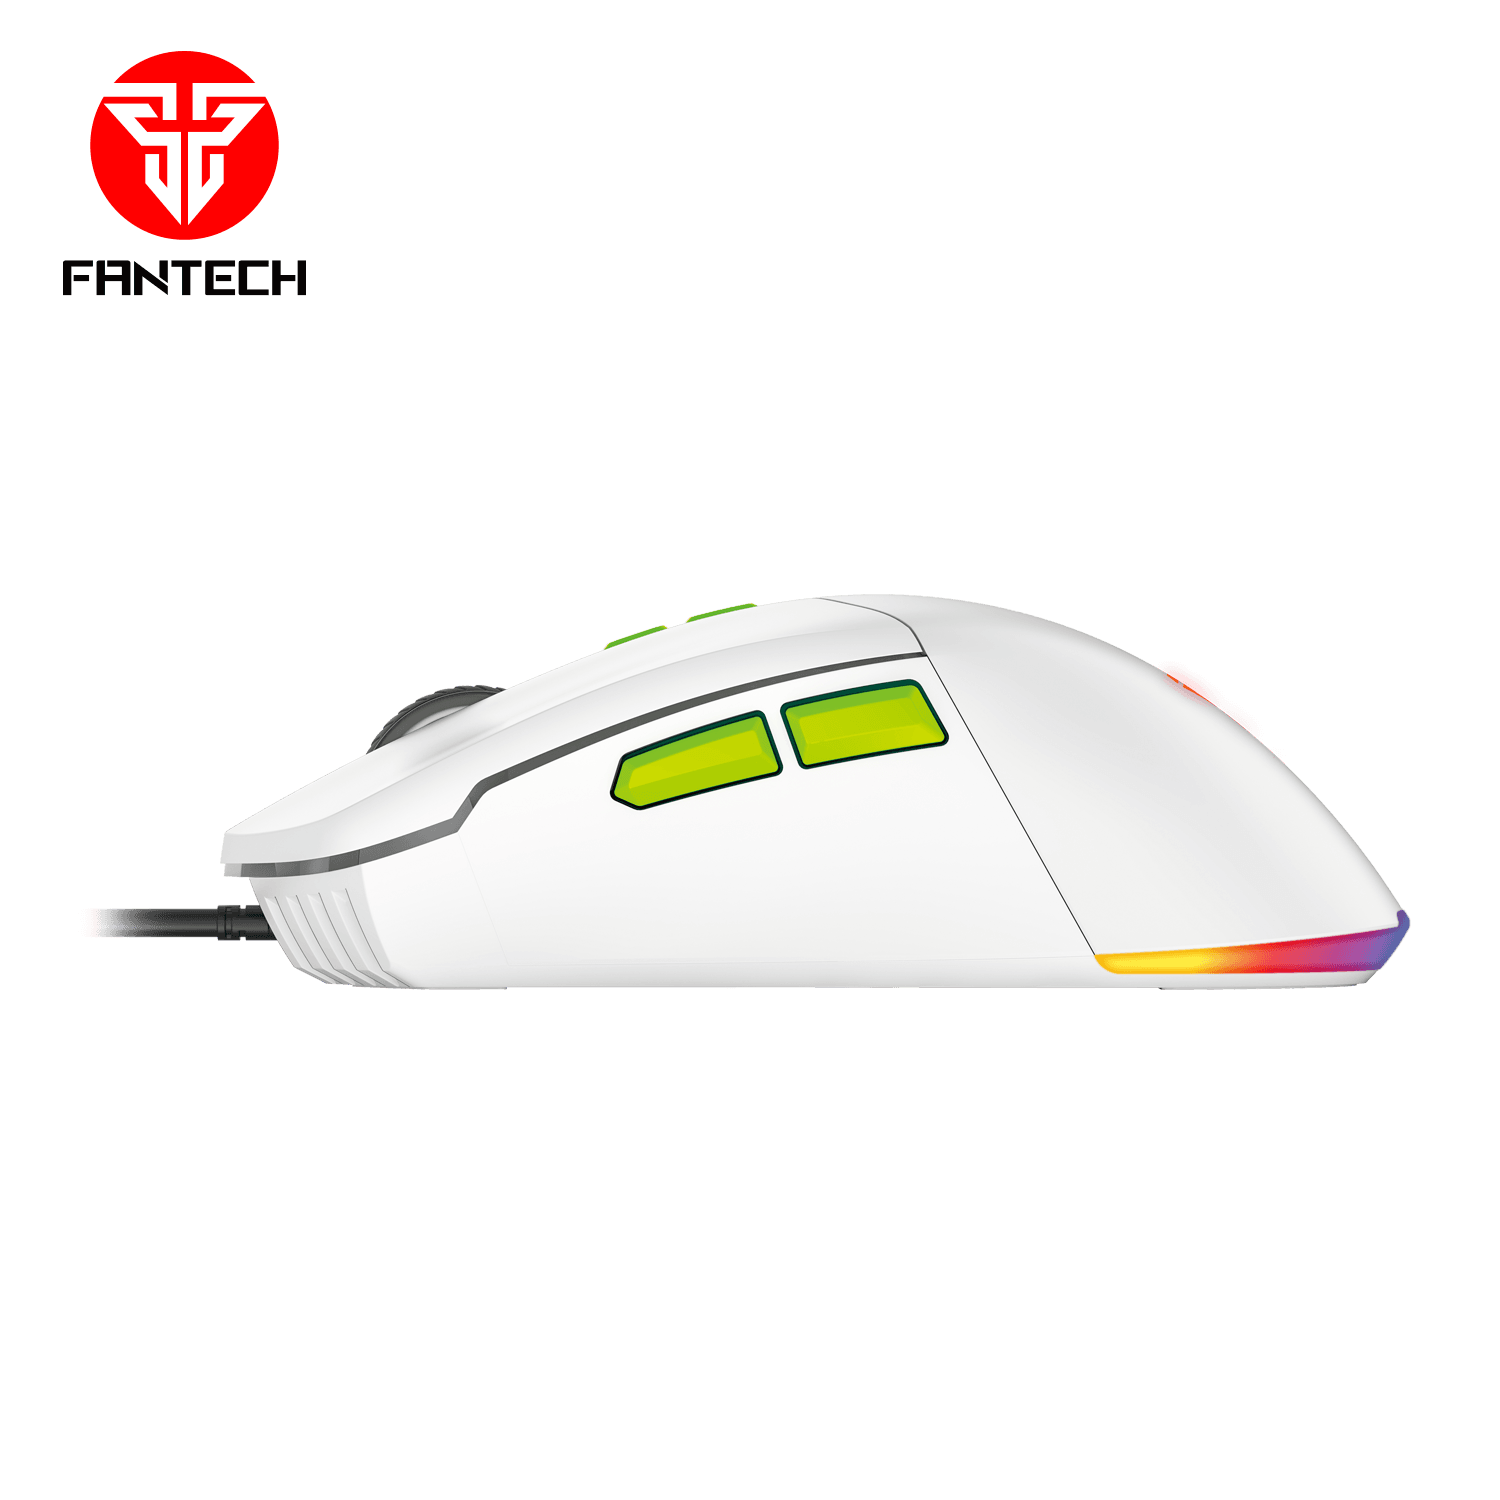 Fantech Phantom II VX6 Neon Macro Gaming Mouse JOD 10